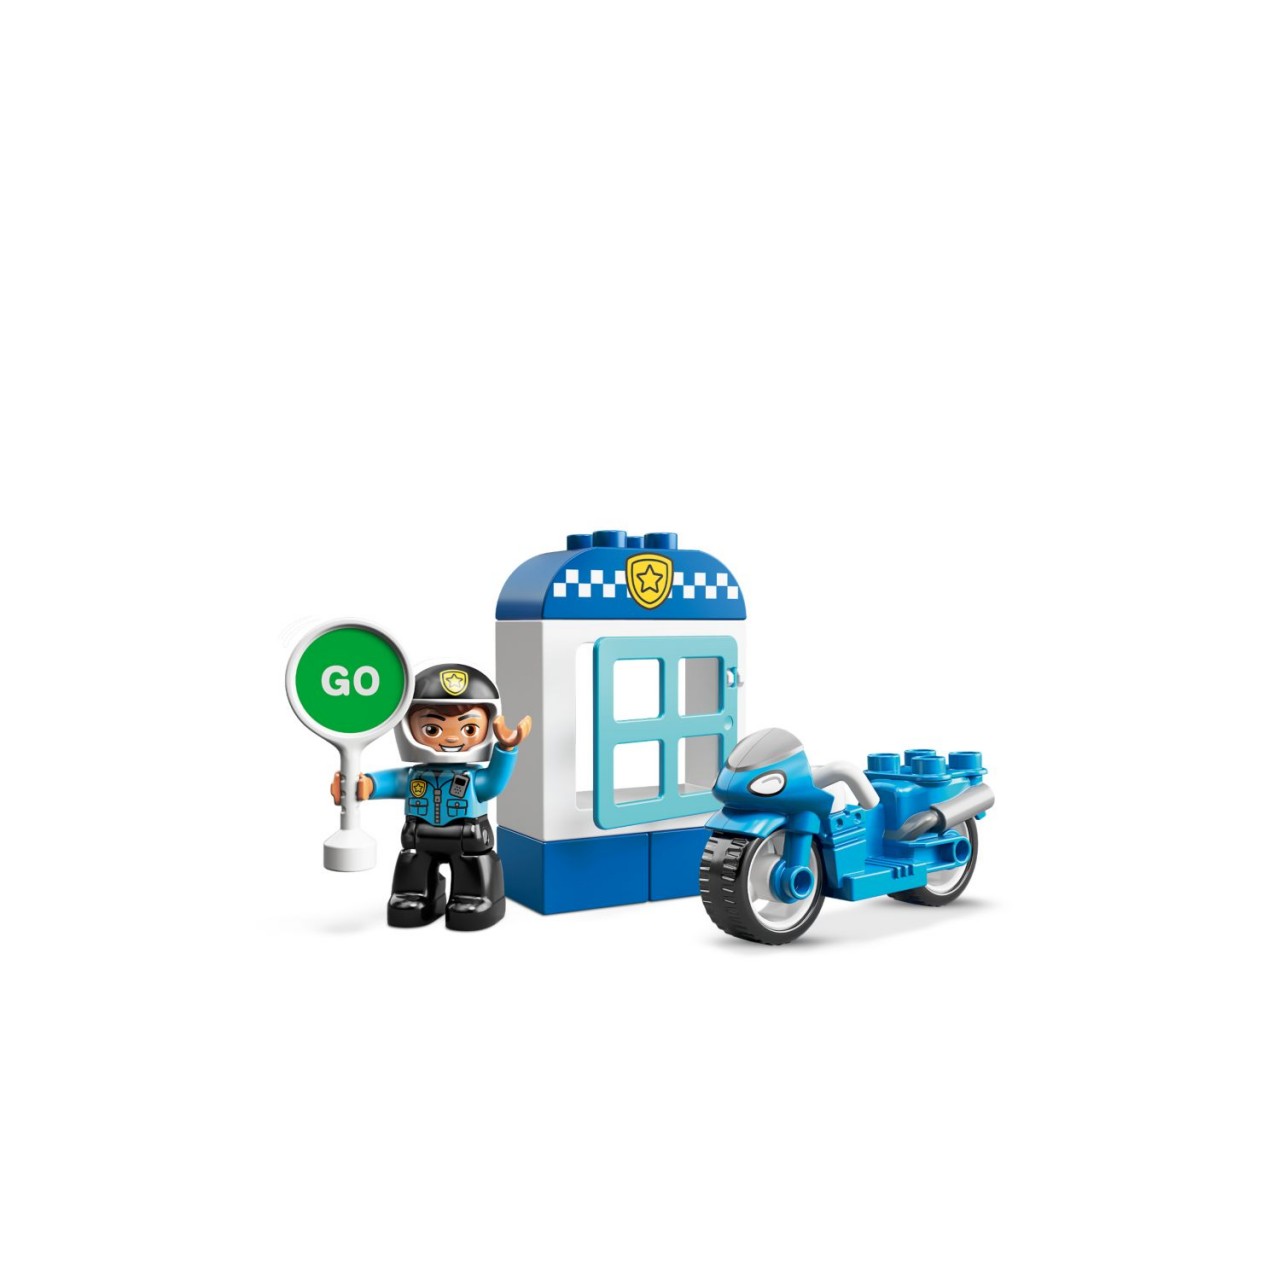 LEGO DUPLO 10900 Polizeimotorrad